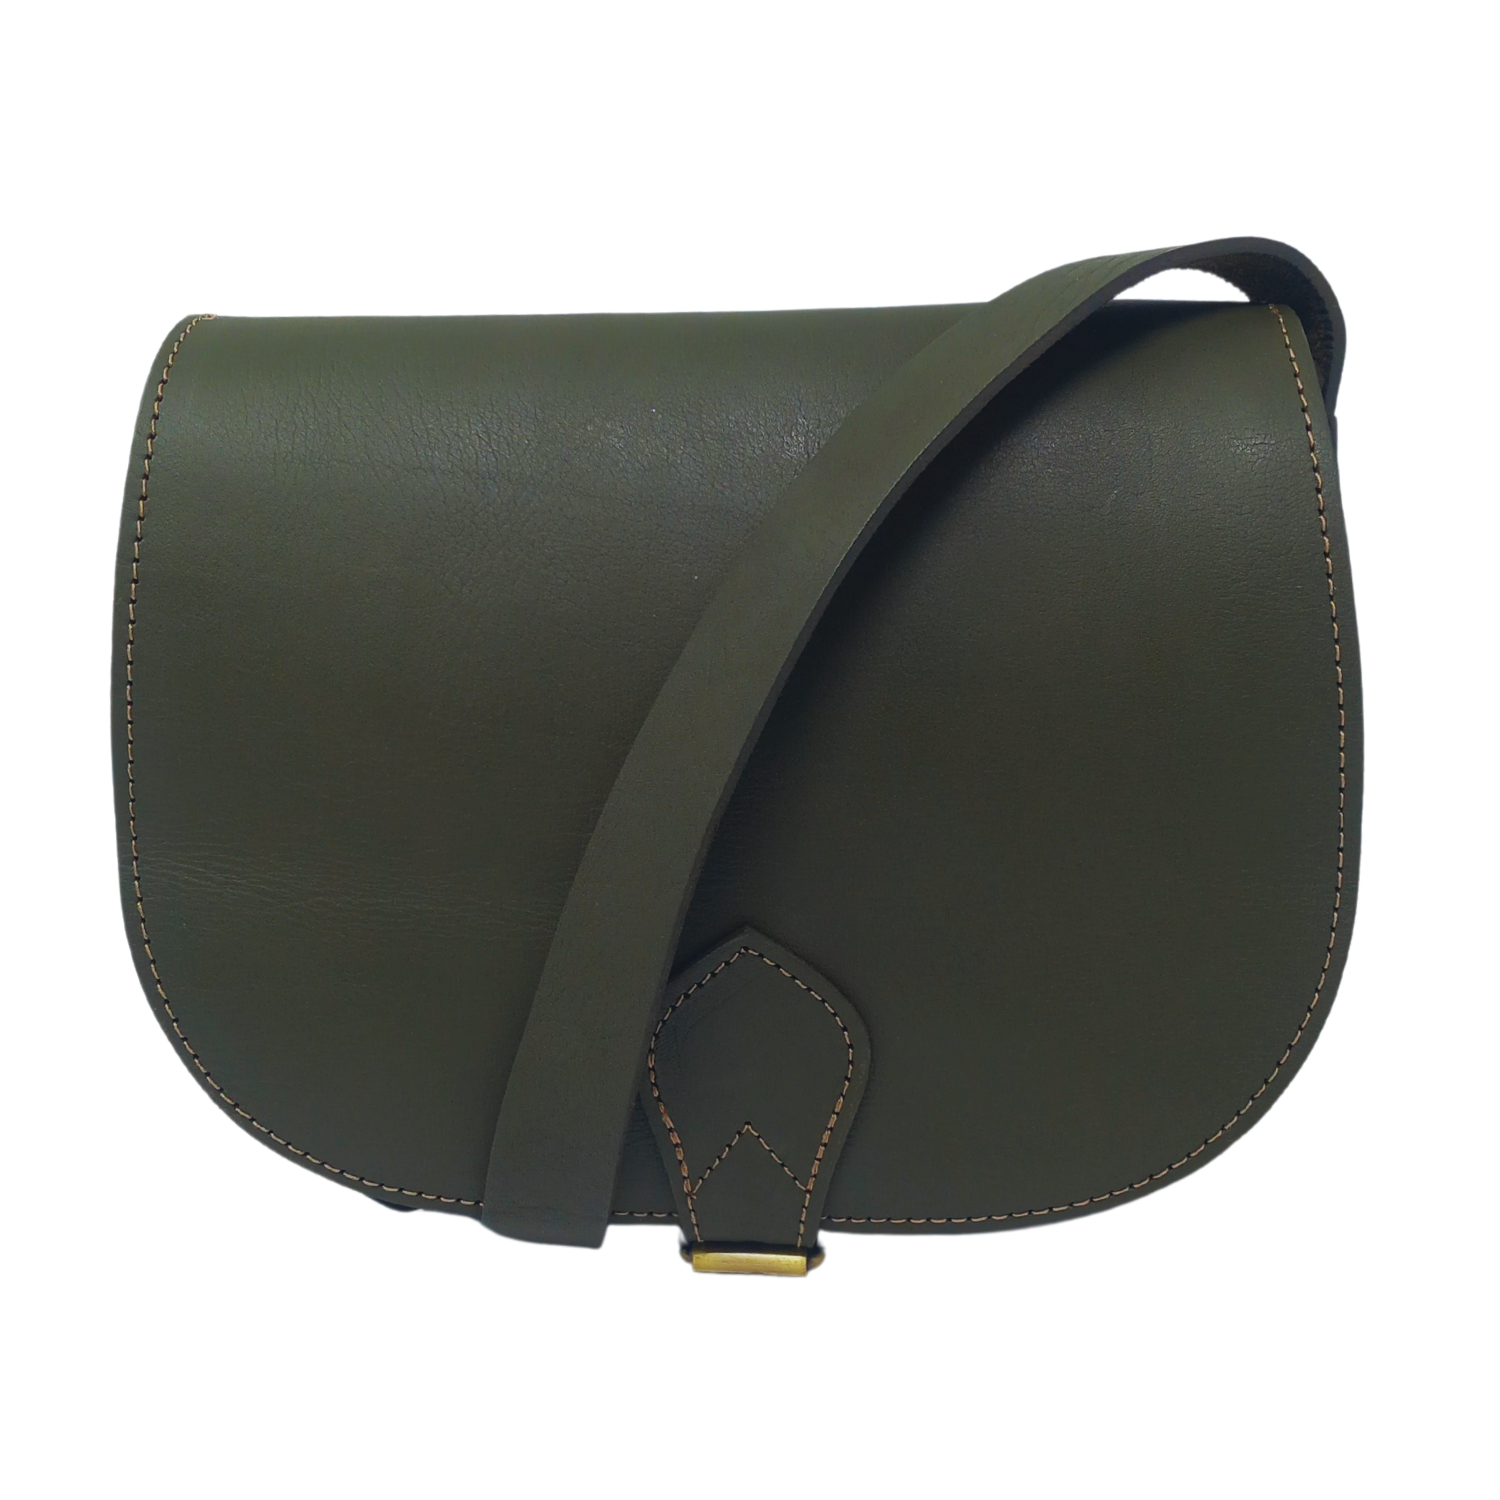 Sam Leather Saddle Bag - Khaki Green